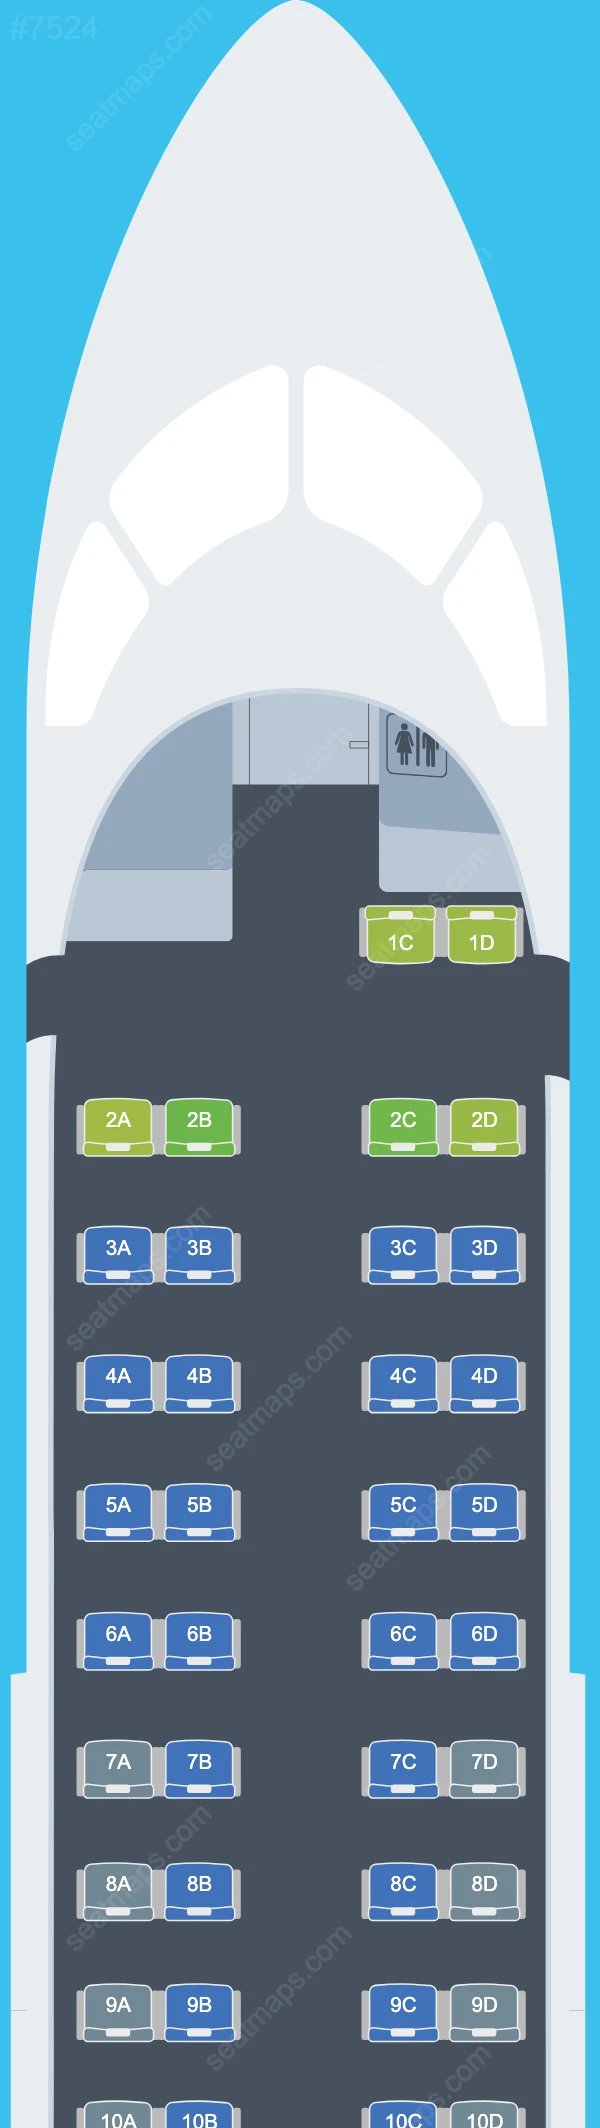 PAL Express Bombardier Q300 Seat Maps Q300